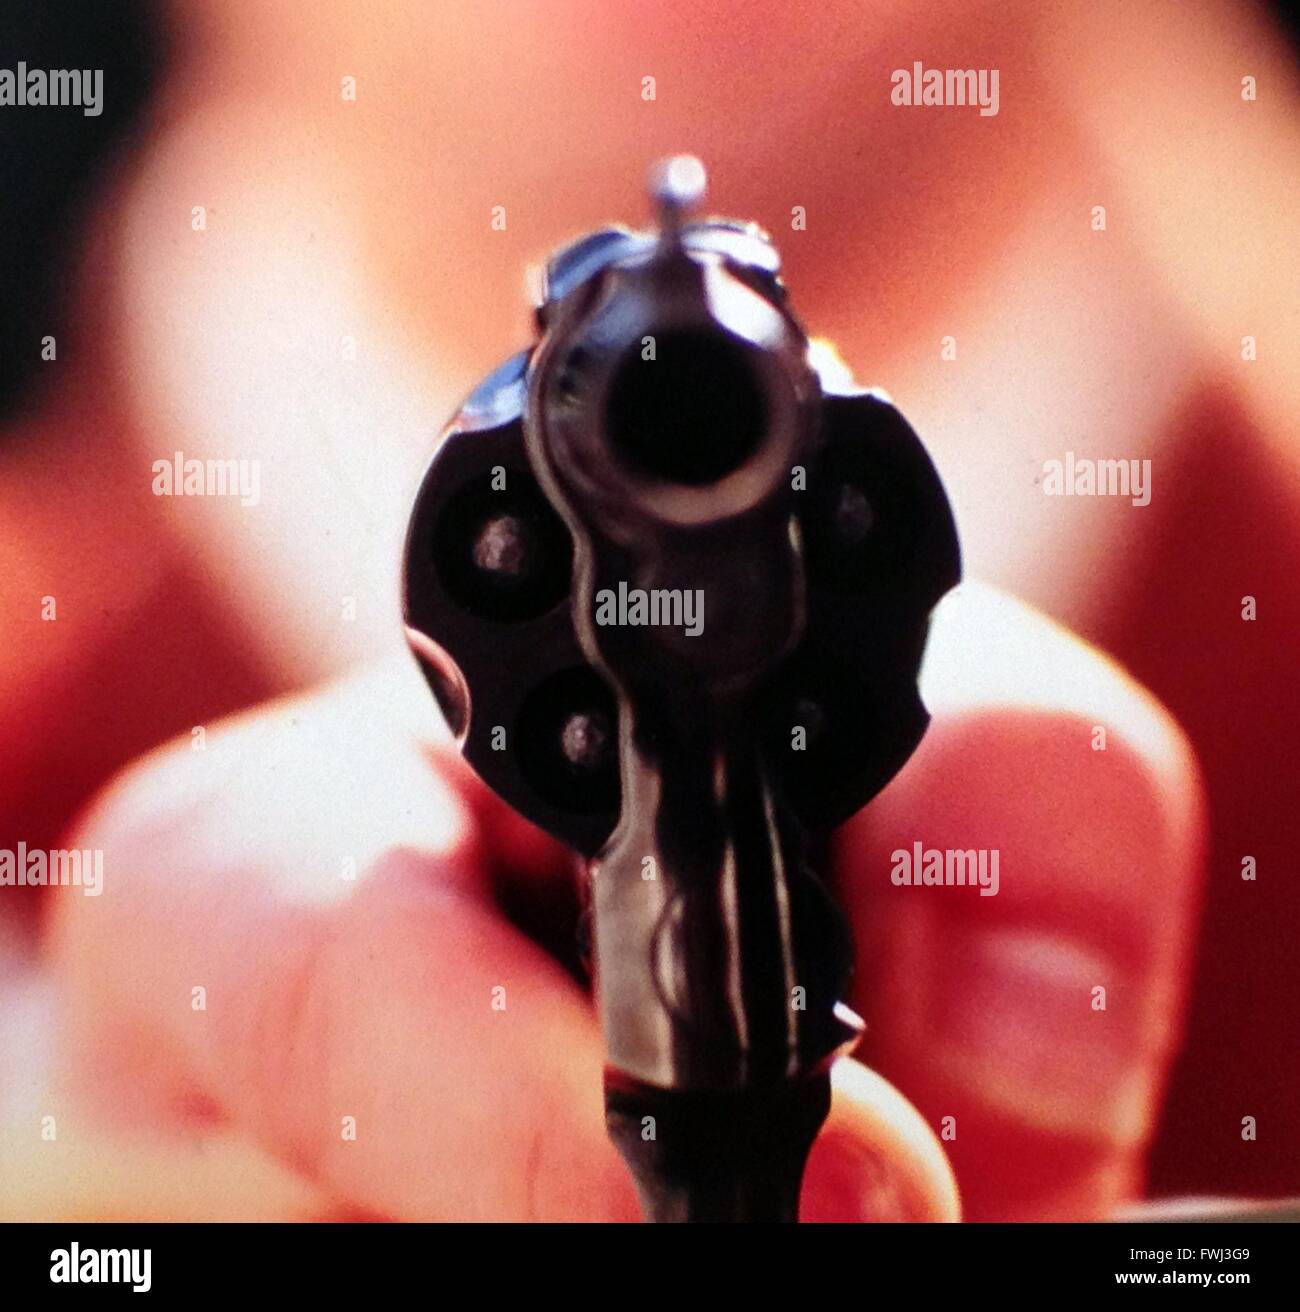 Close-Up Of Blurred Hand Holding Gun Stock Photo